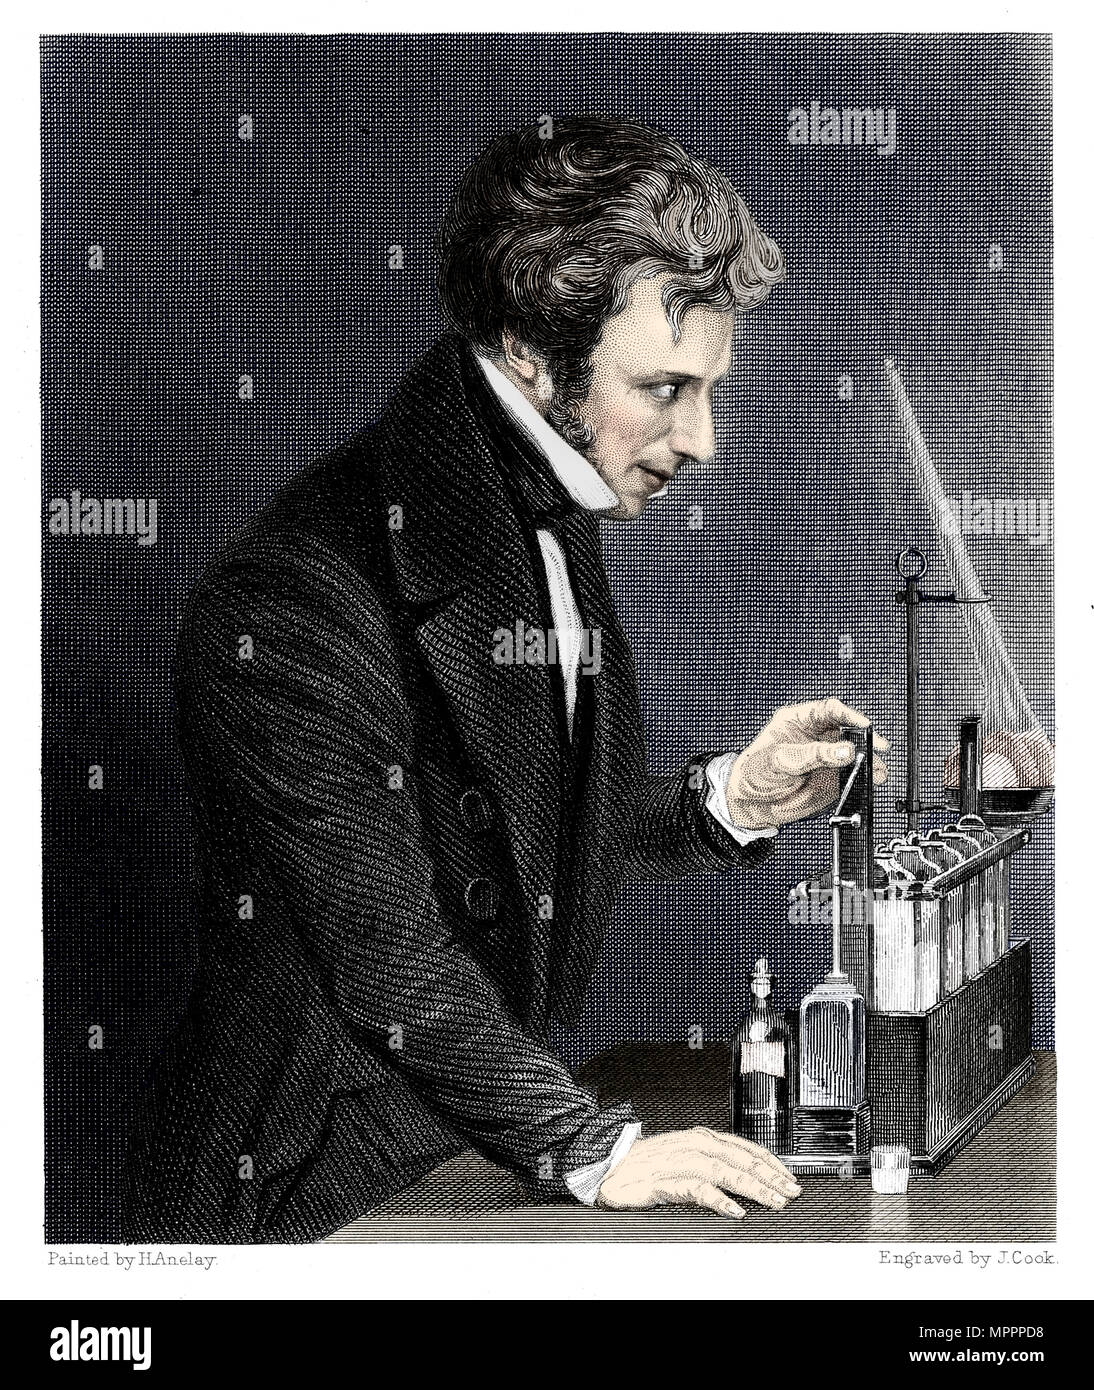 Michael Faraday, British chemist and physicist, c1845. Artist: J Cook. Stock Photo